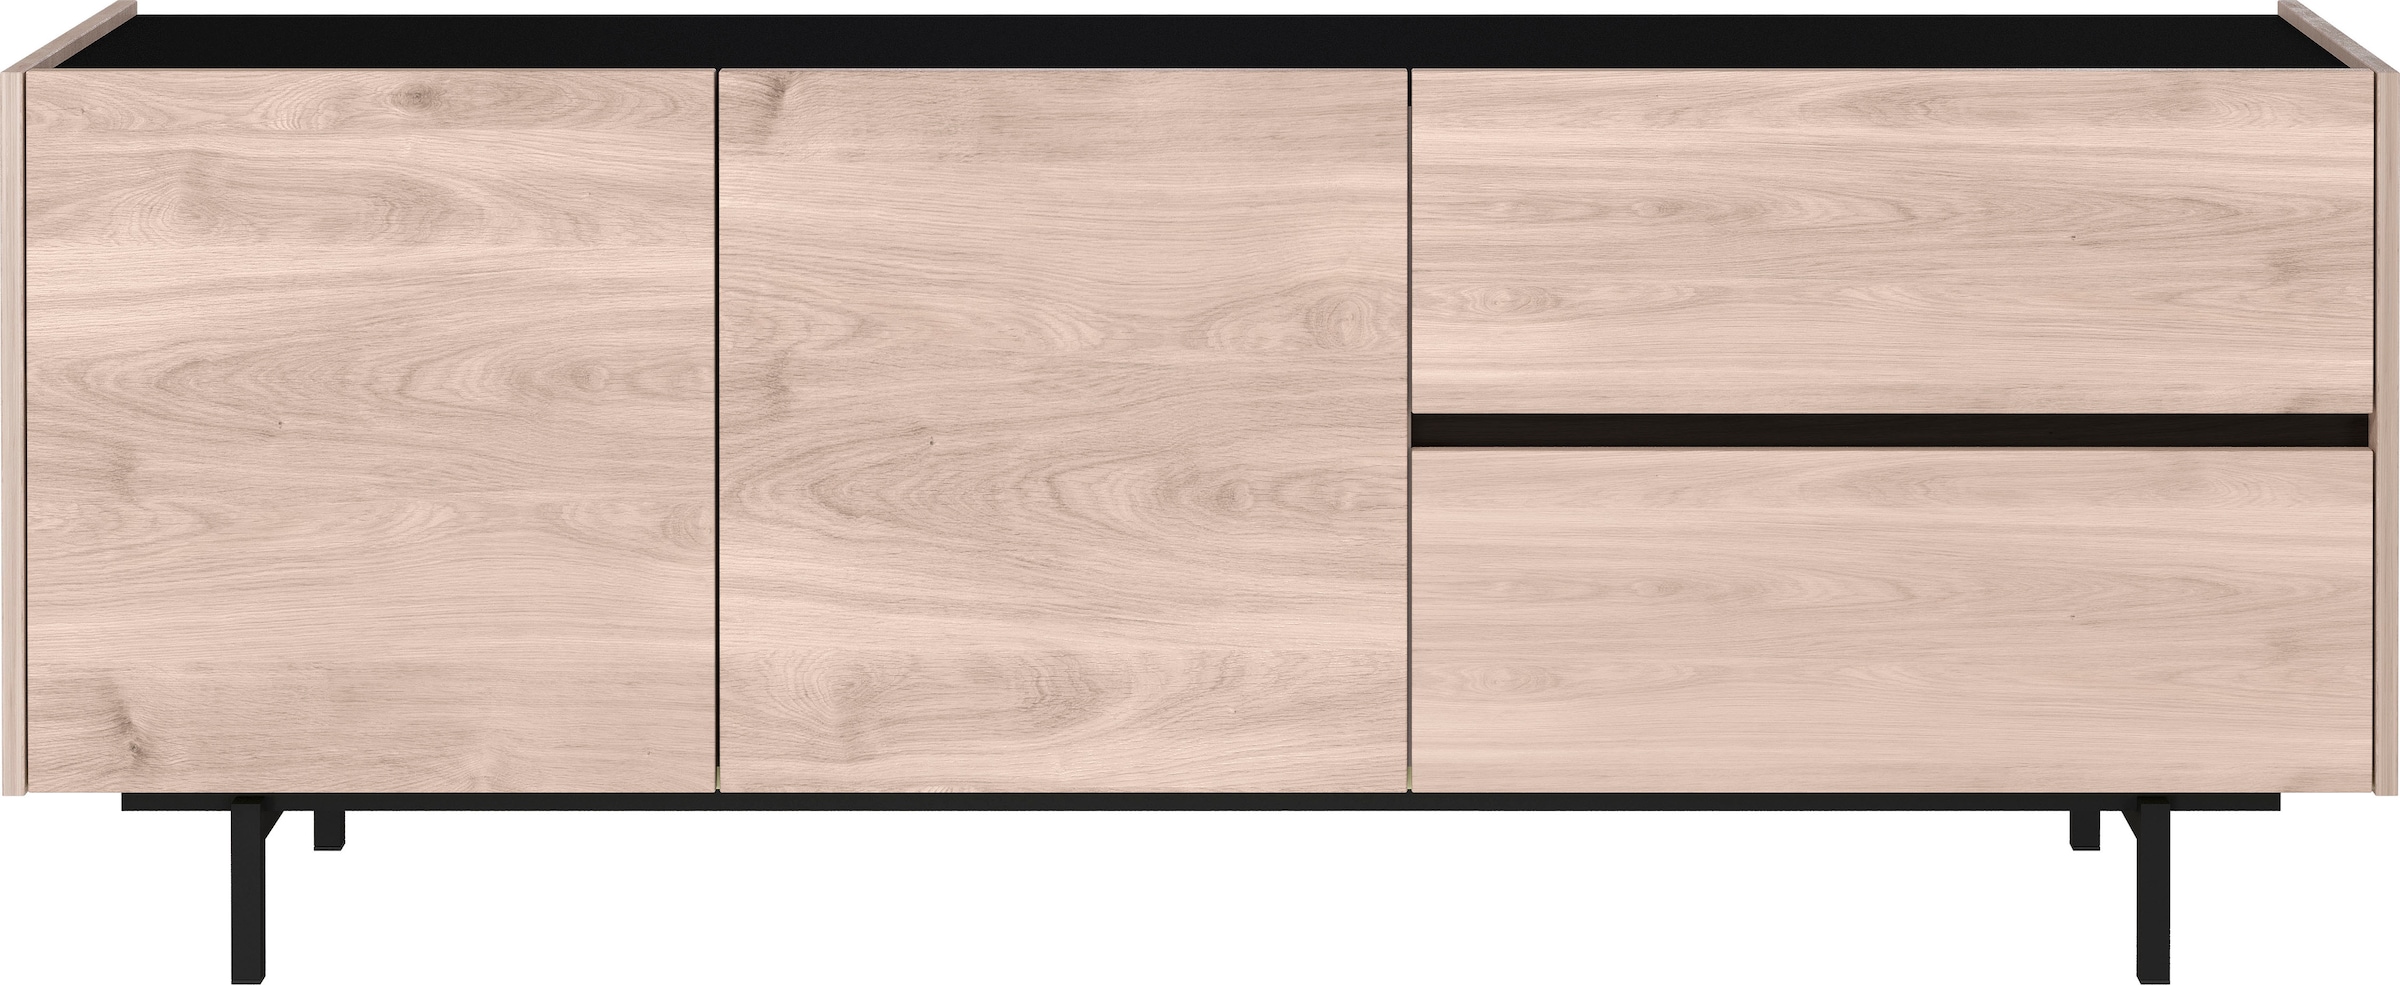 Lowboard »Cantoria«, Türen mit Soft close-Funktion, griffloses Design